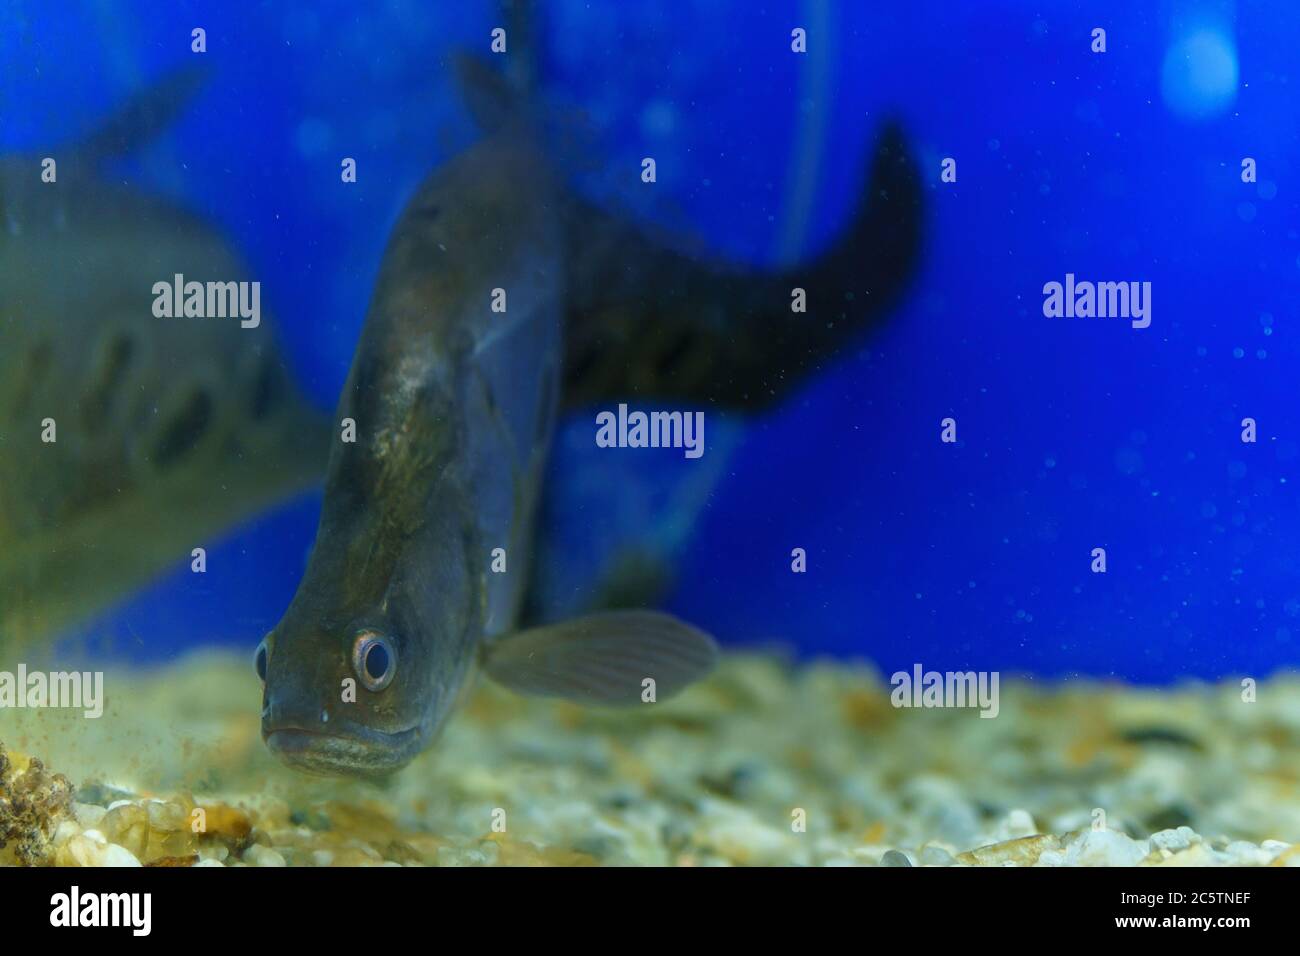 indian knife Fish Chitala ornata in the aquarium. selective focus Stock Photo